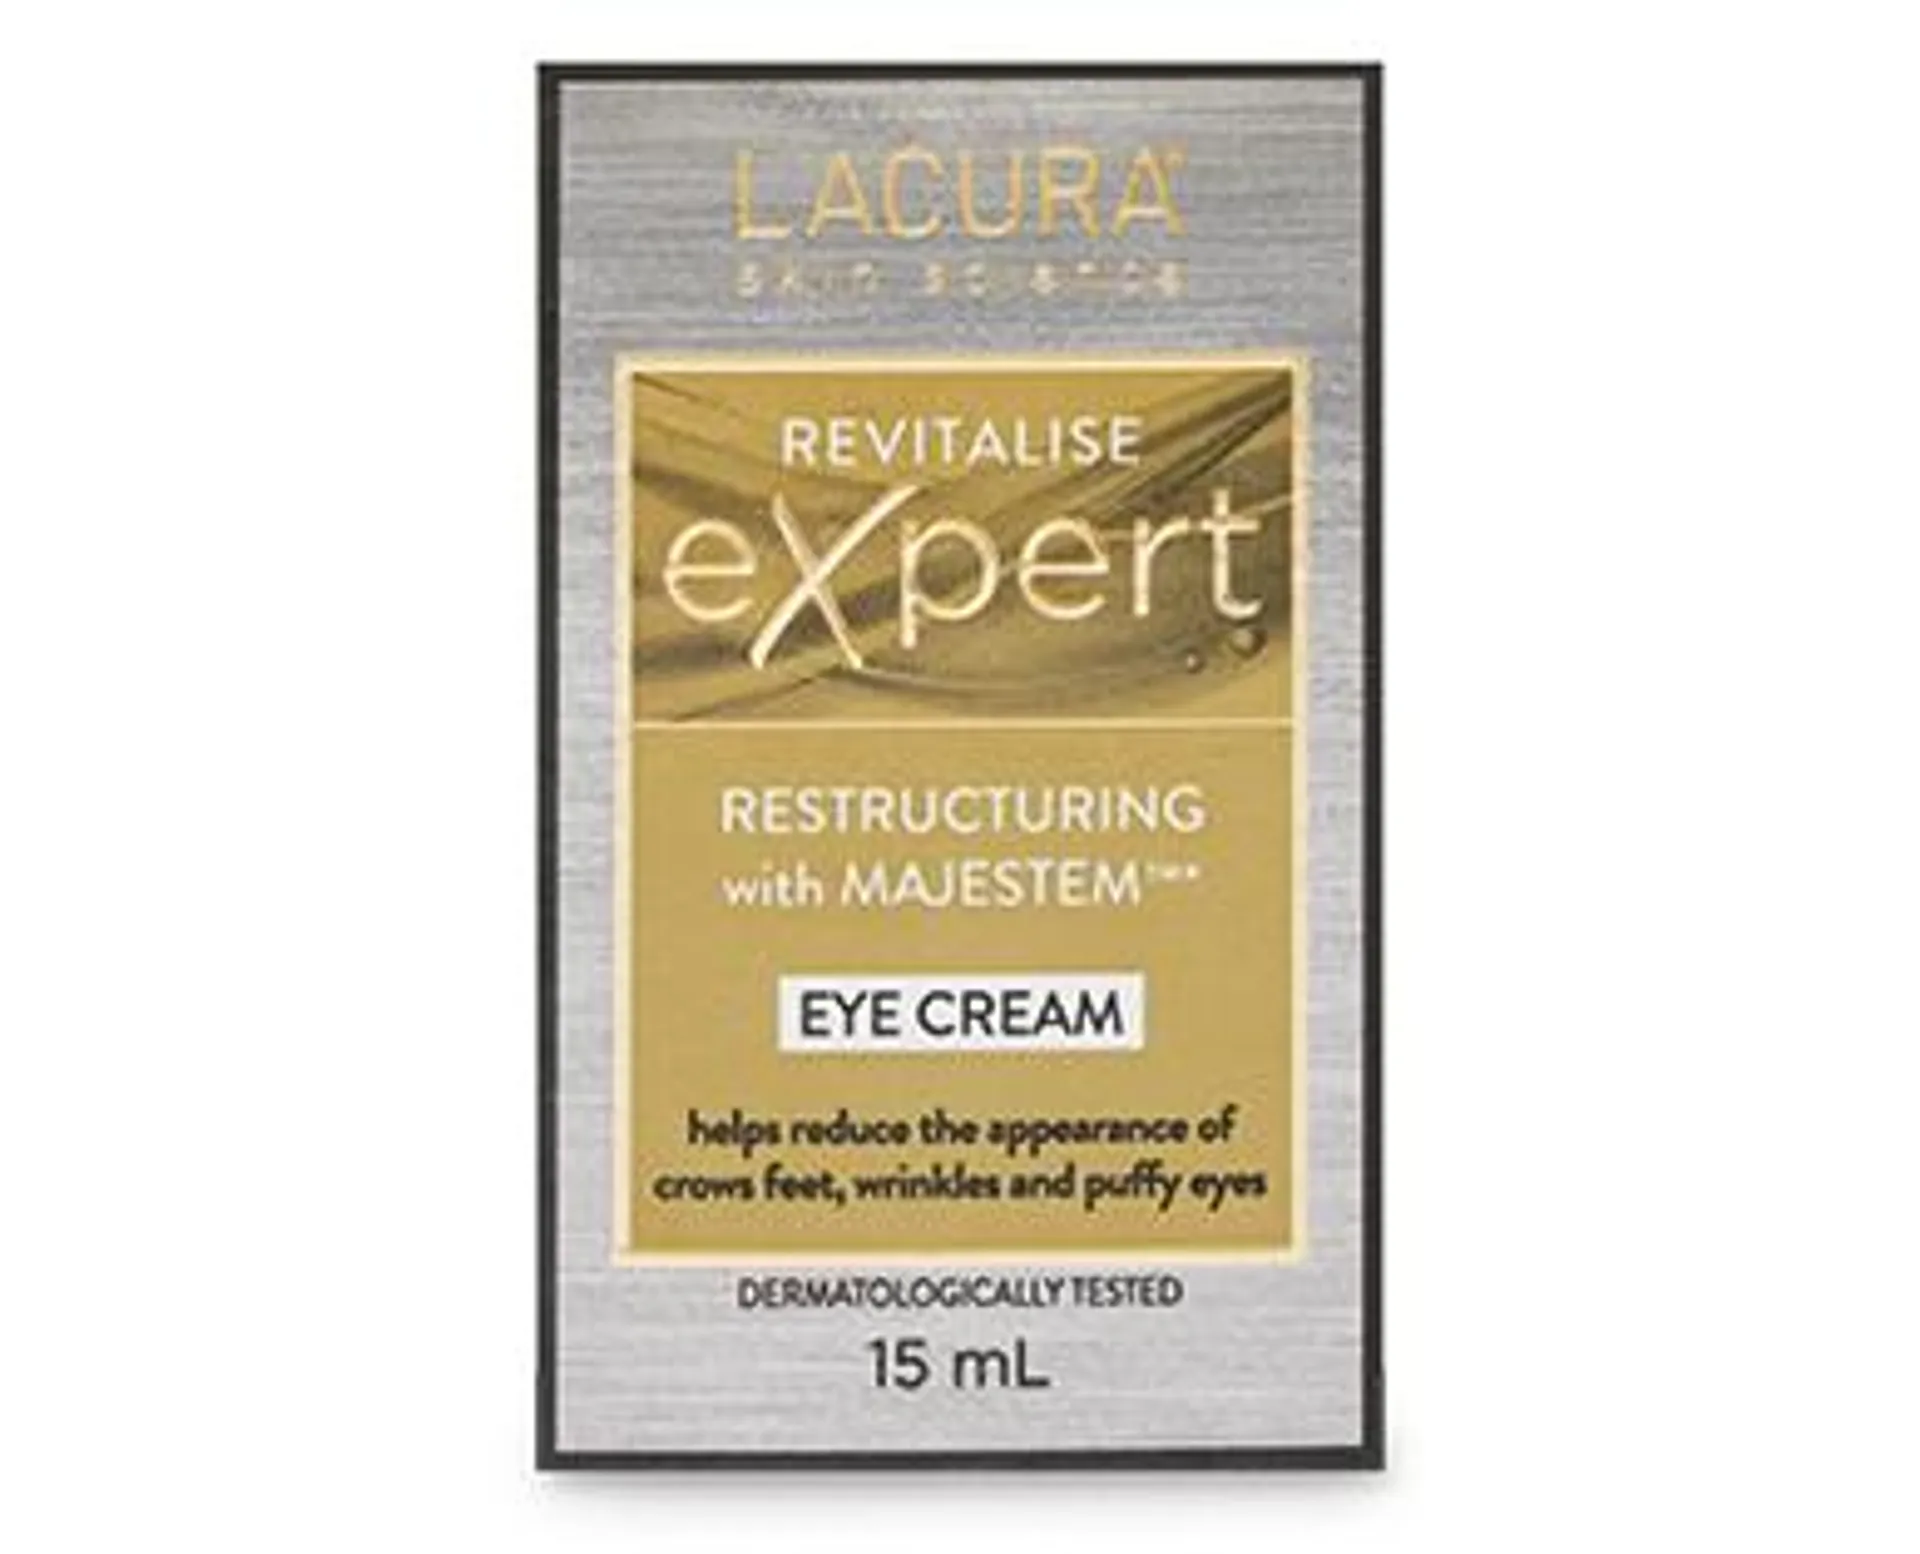 LACURA® Skin Science Revitalise Expert Face Care Eye Cream 15ml